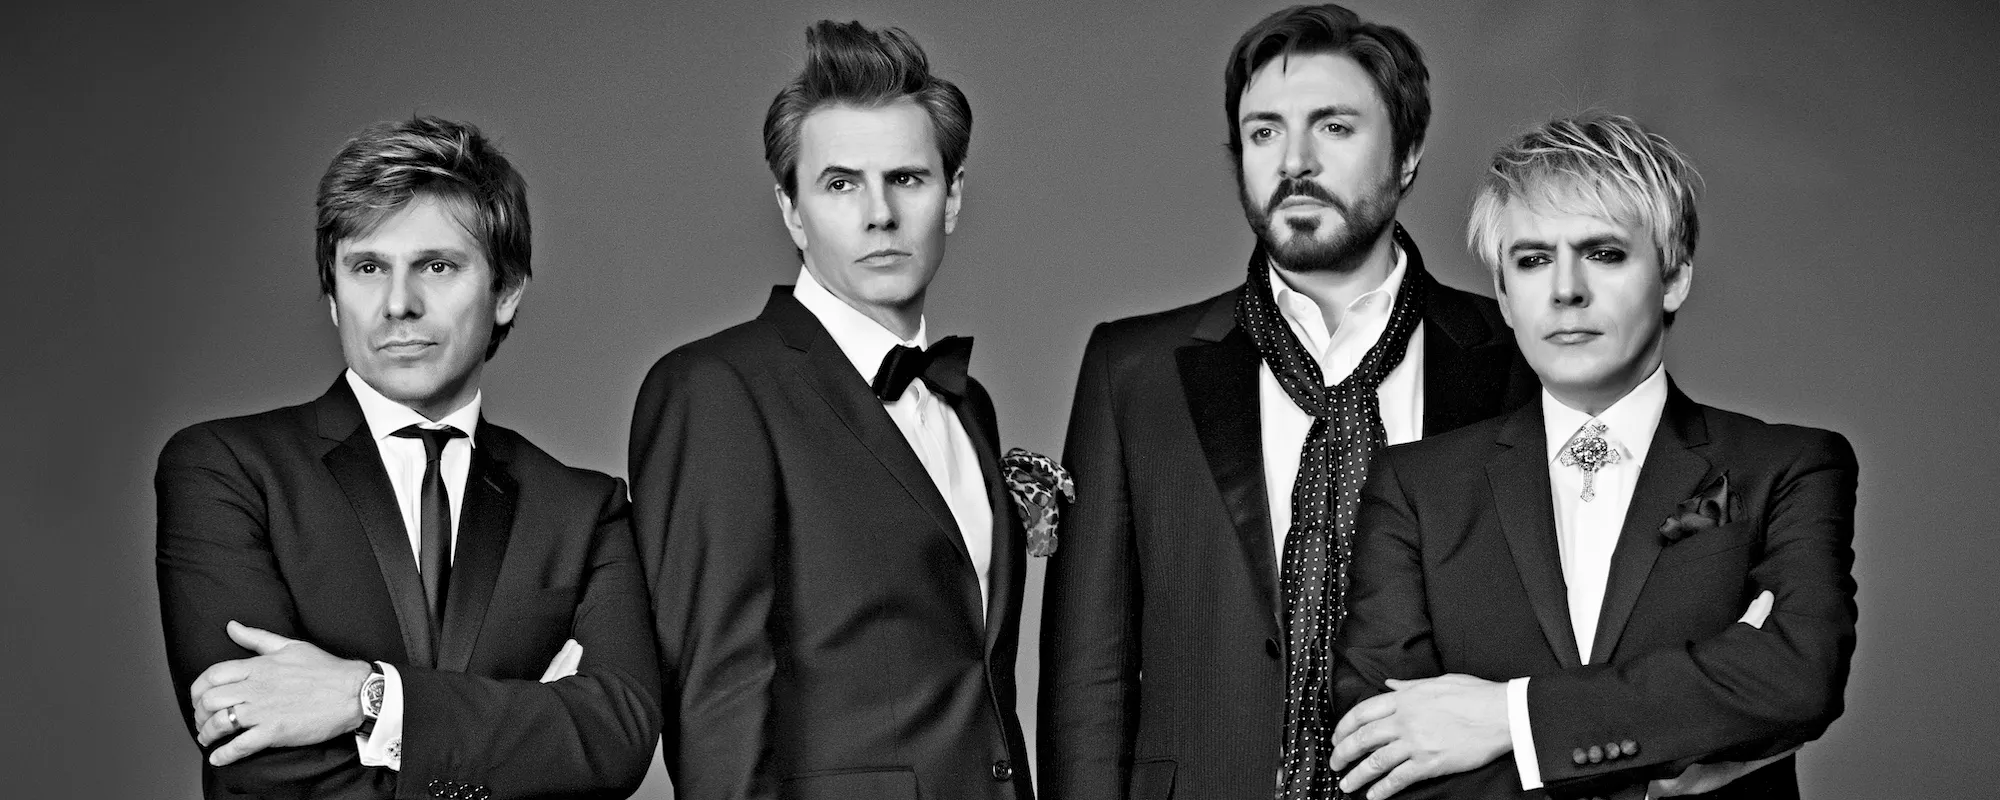 Duran Duran Cover Talking Heads, Billie Eilish, and More on 16th Album ‘Danse Macabre’